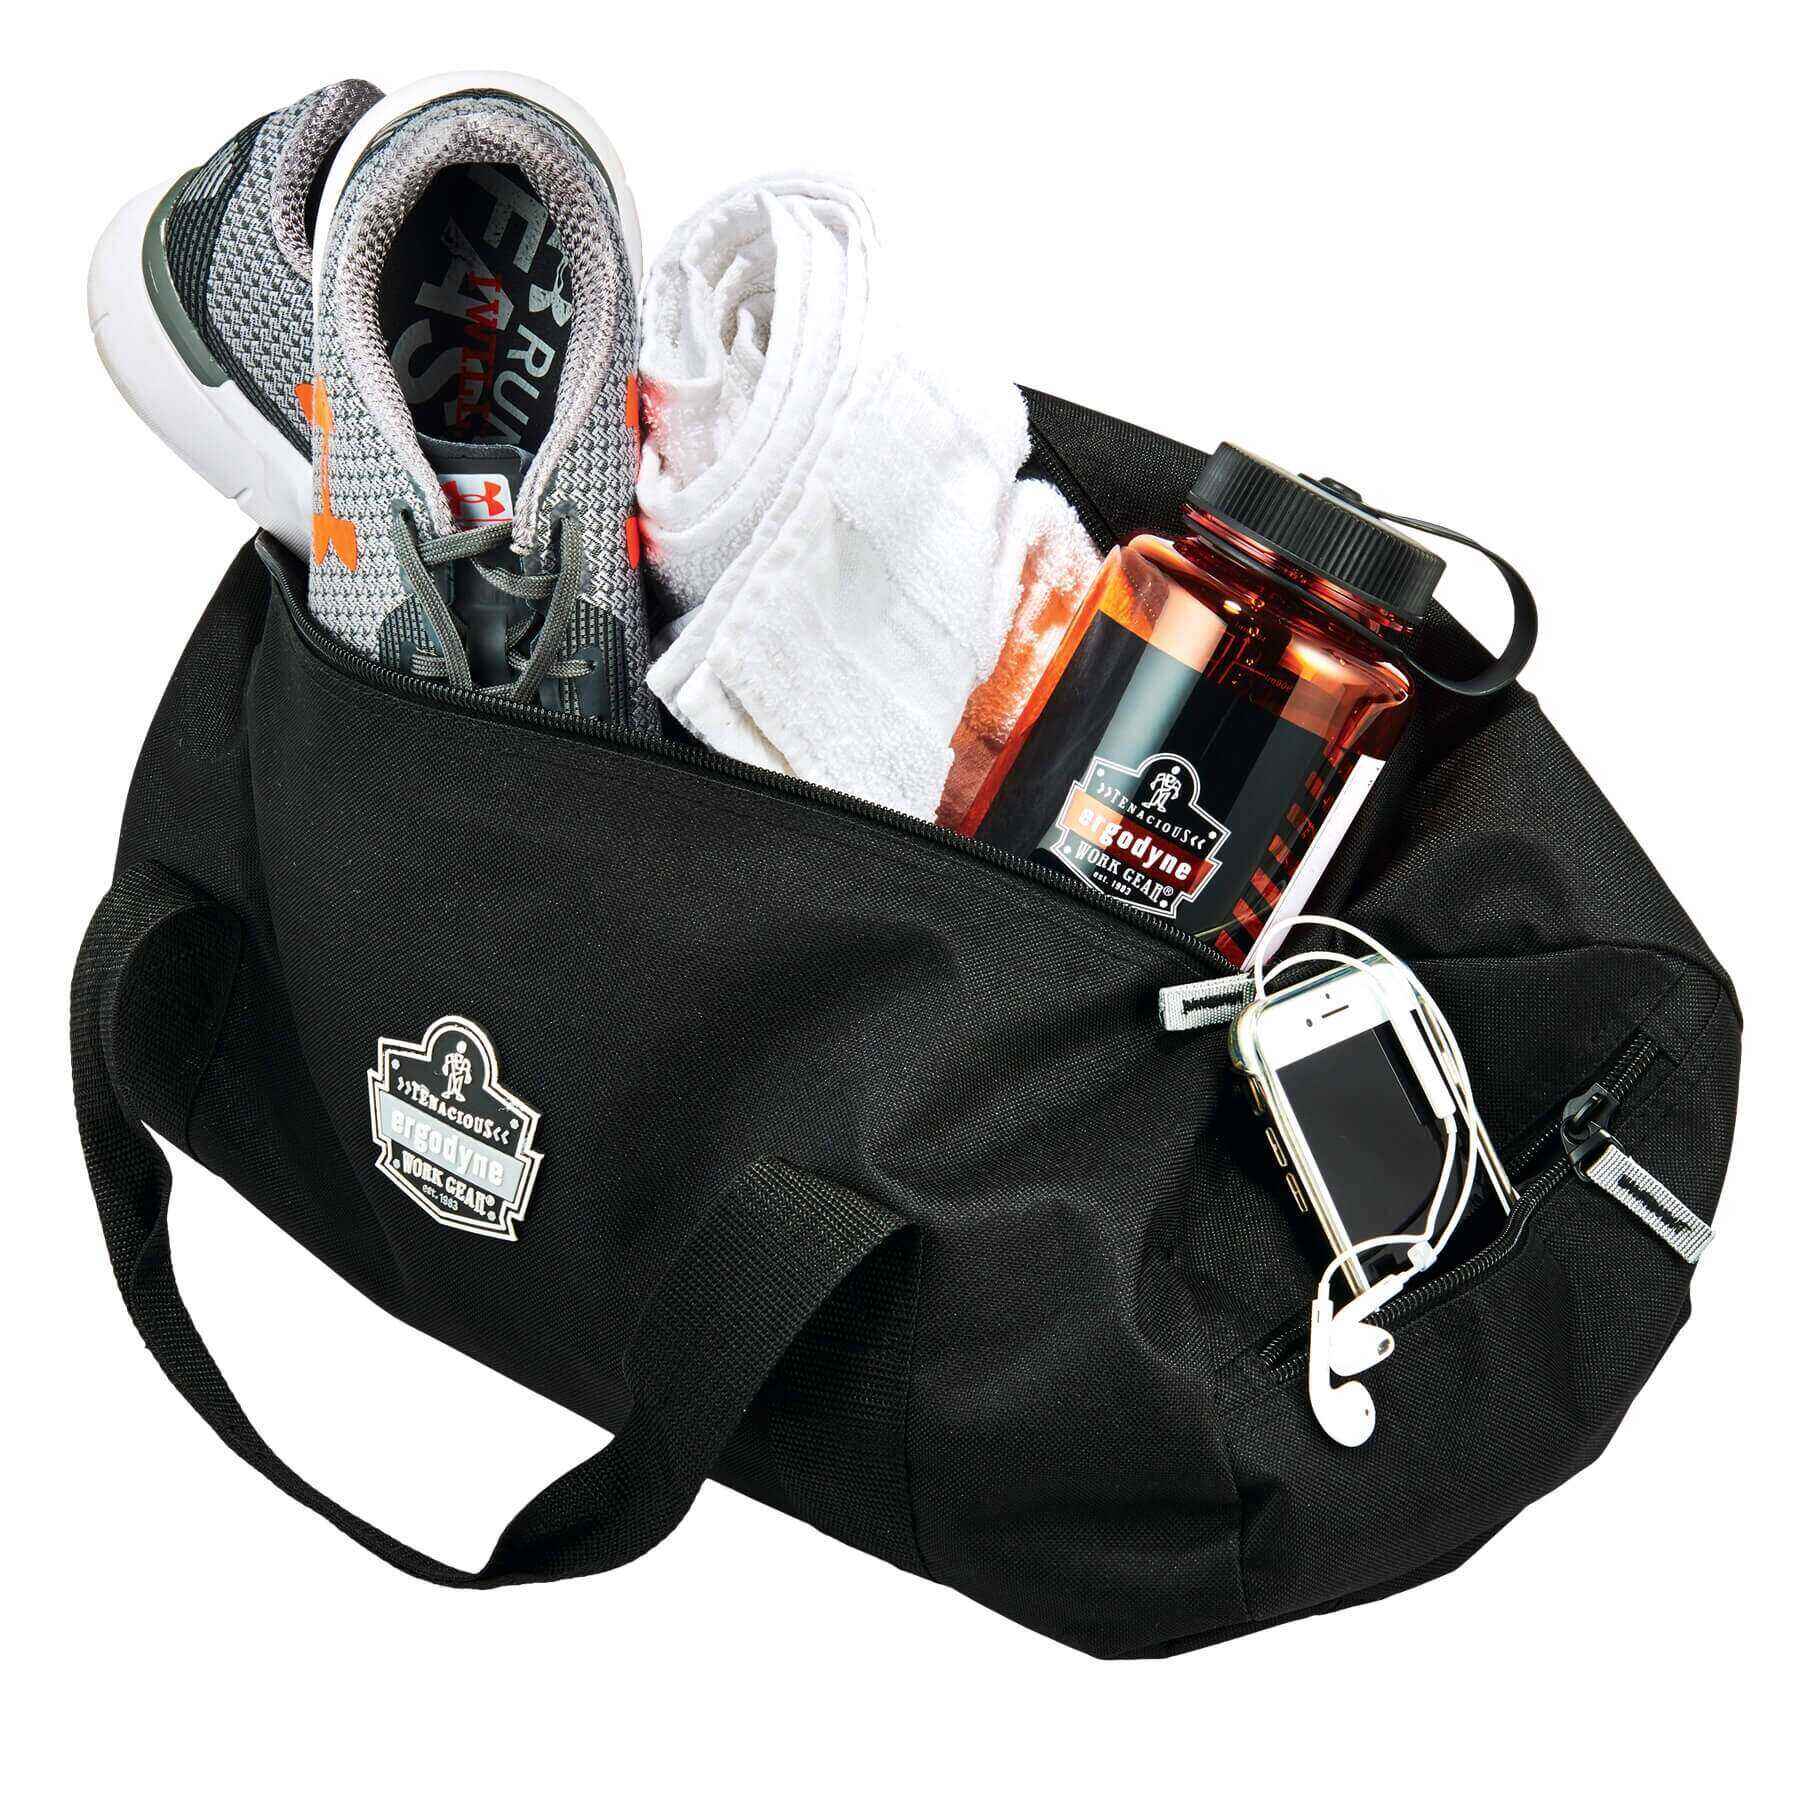 Arsenal® 5020 Standard Gear Duffel Bag - Polyester-eSafety Supplies, Inc